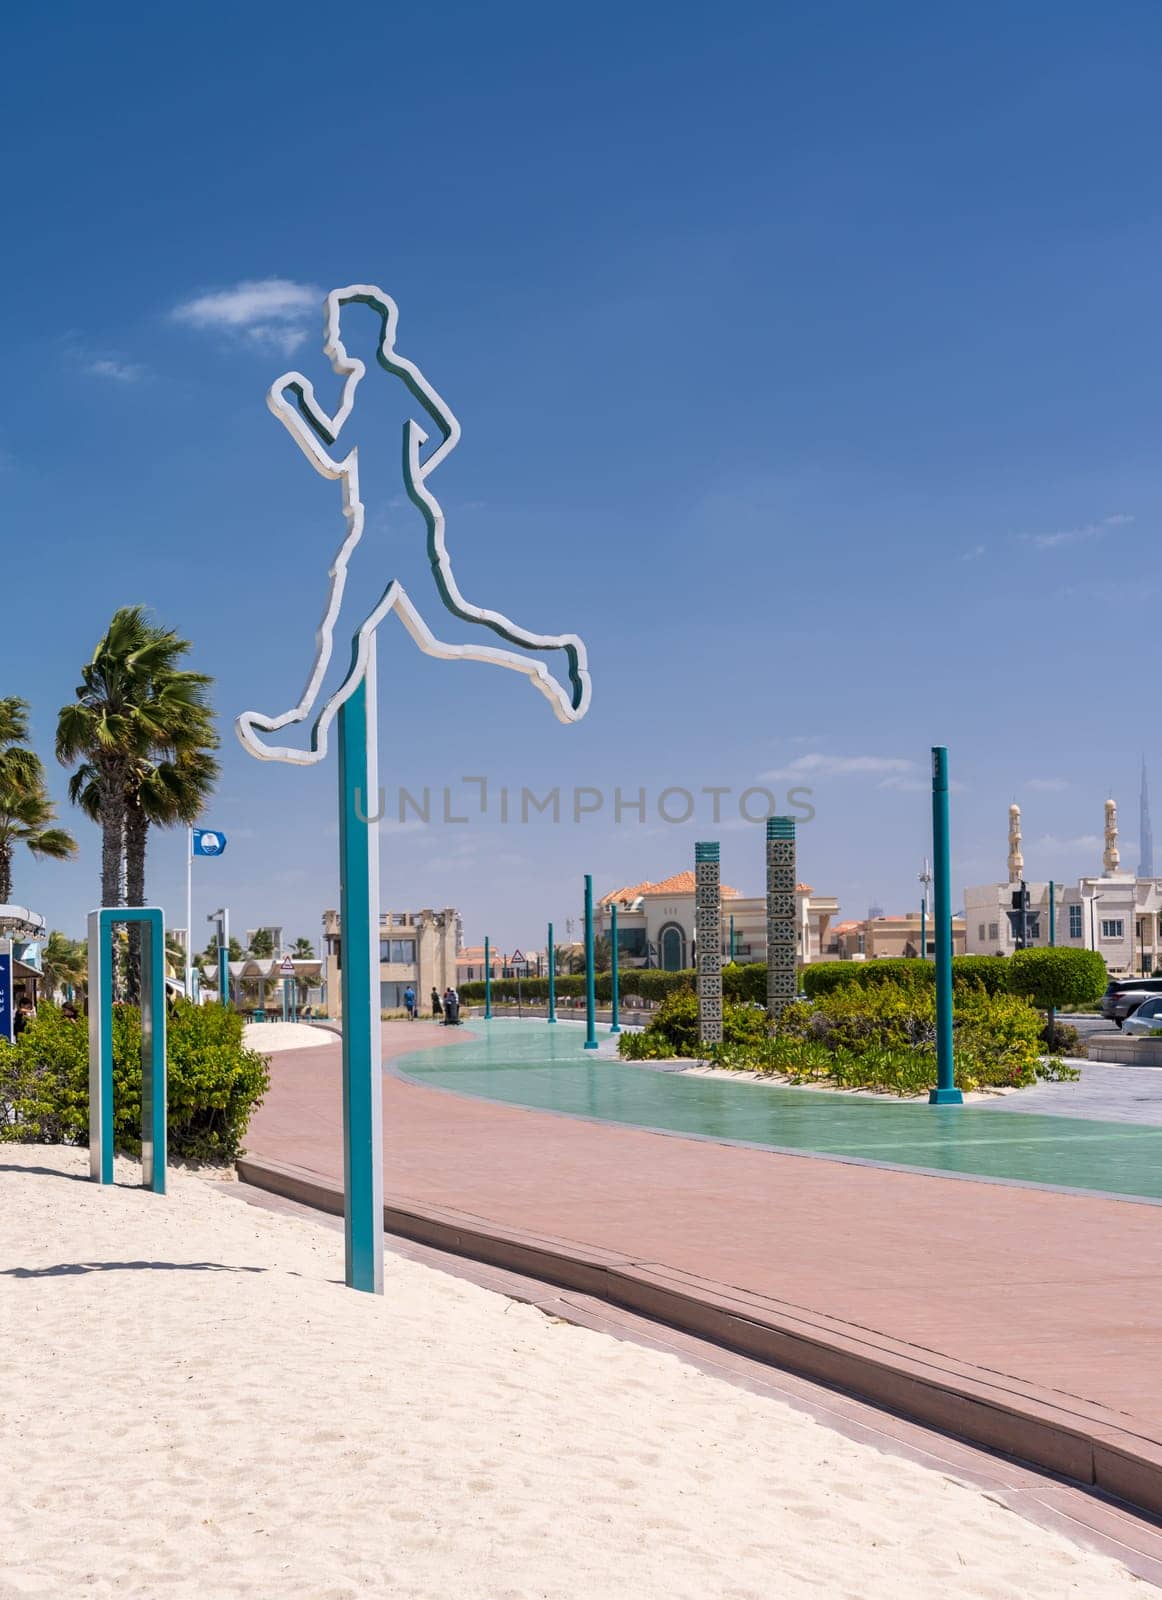 Rubber surface of running track alongside Dubai beach by steheap